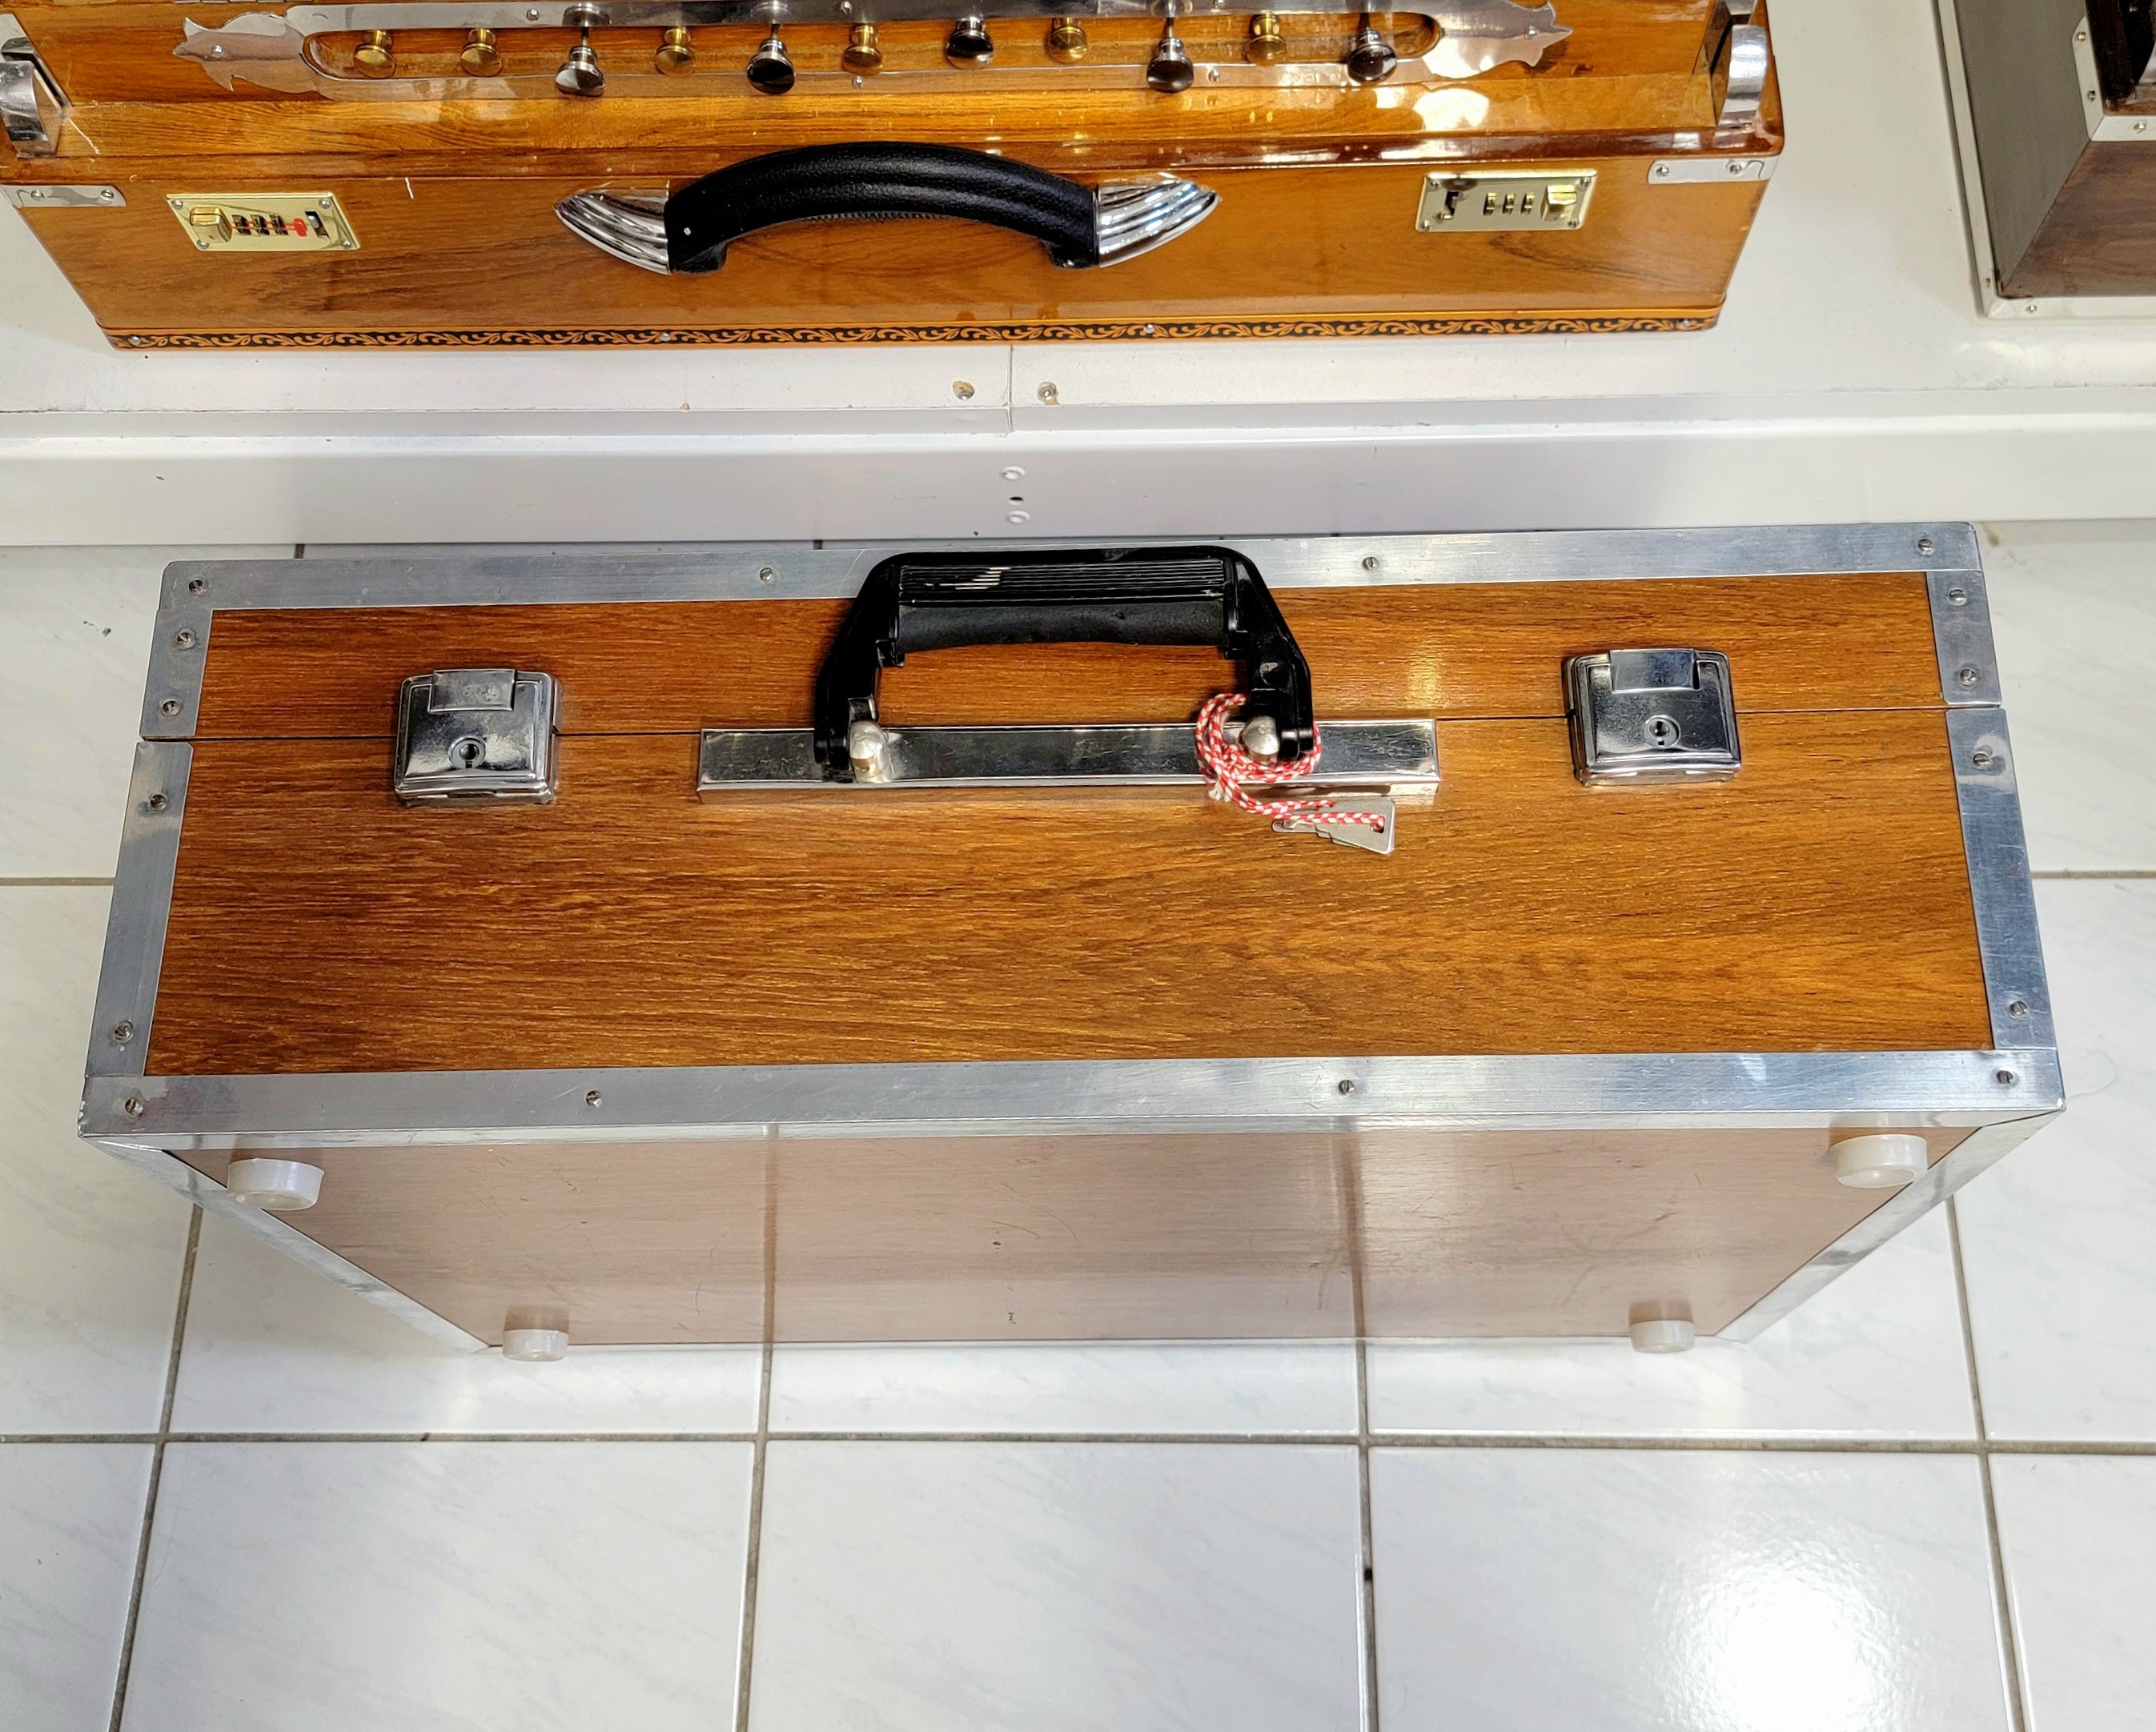 Rare Compact Monoj Sardar 8 Scale Changer (2-Reeds) - 30 Keys - Sangeet Store